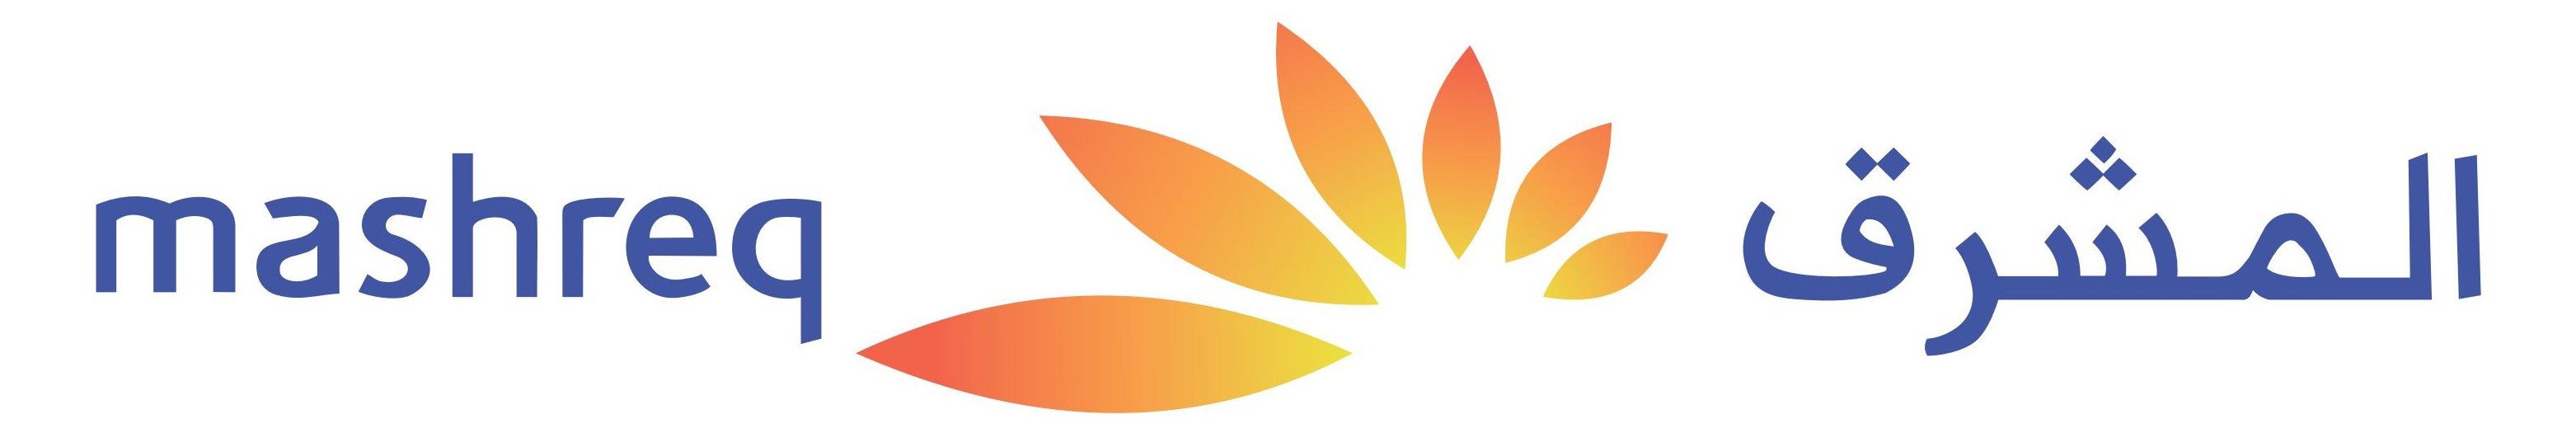 Mashreq bank Logos